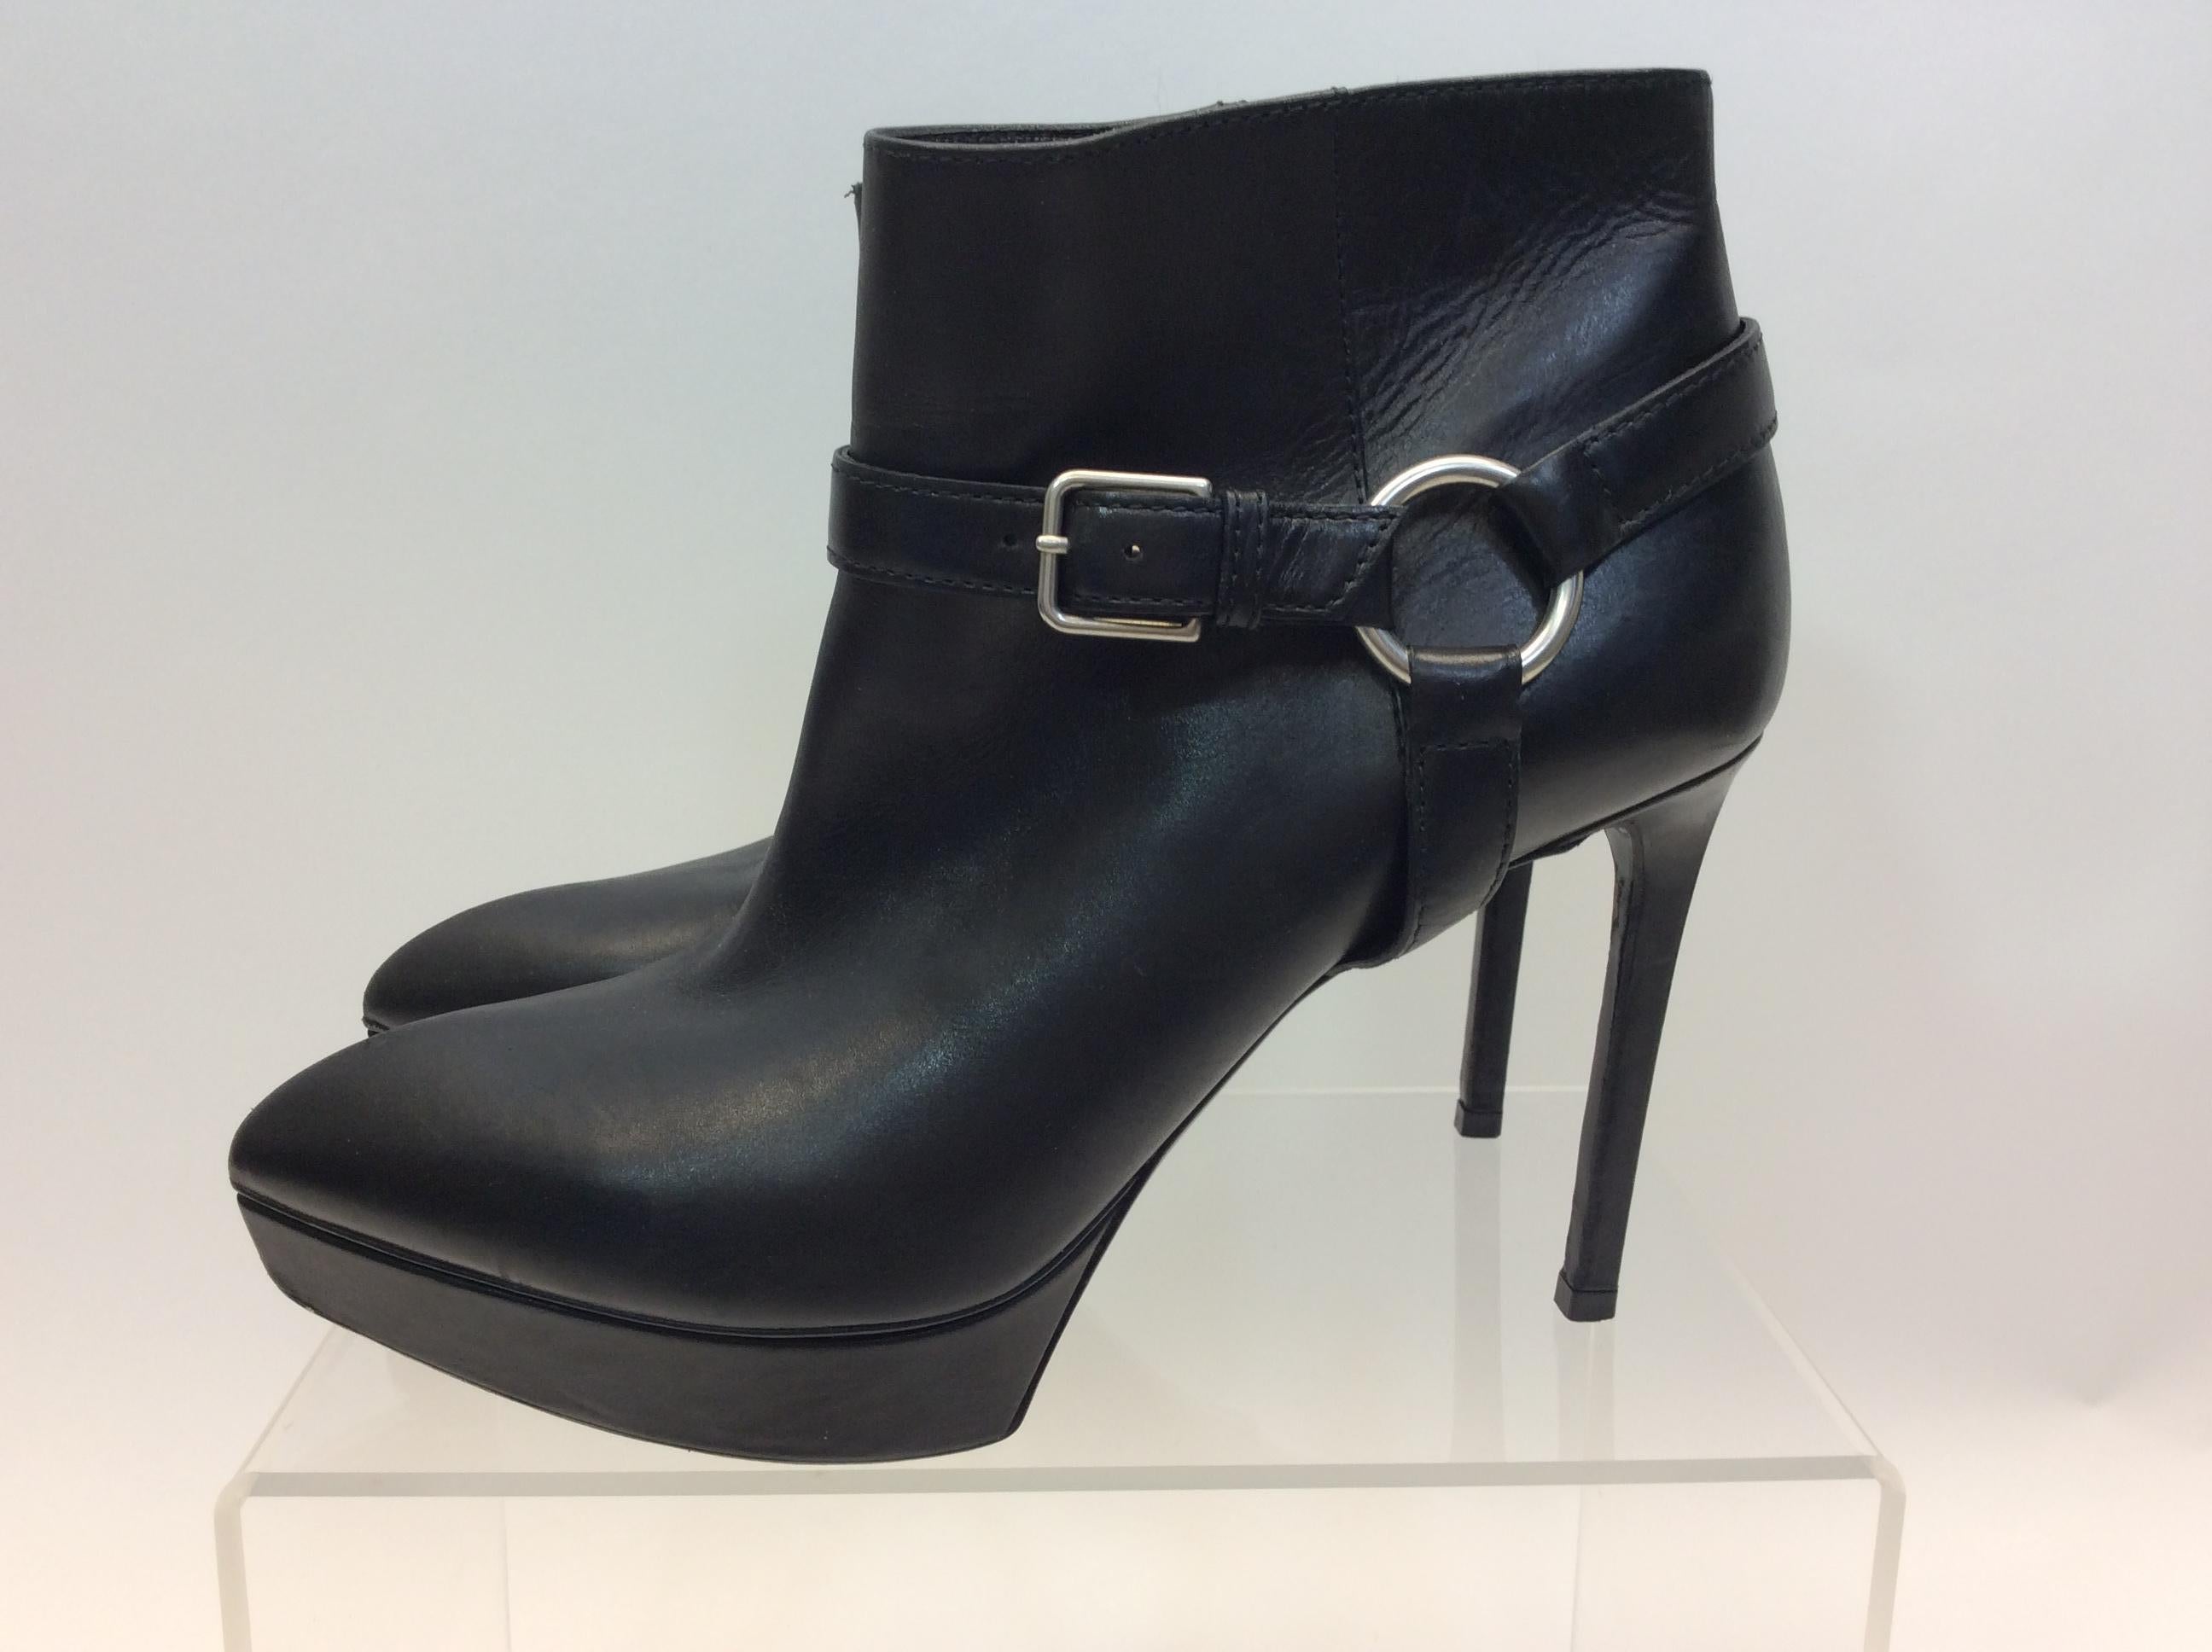 Saint Laurent Black Leather Bootie
$599
Made in Italy
Silver Hardware
Size 38.5
4” Heel
1” Platform
